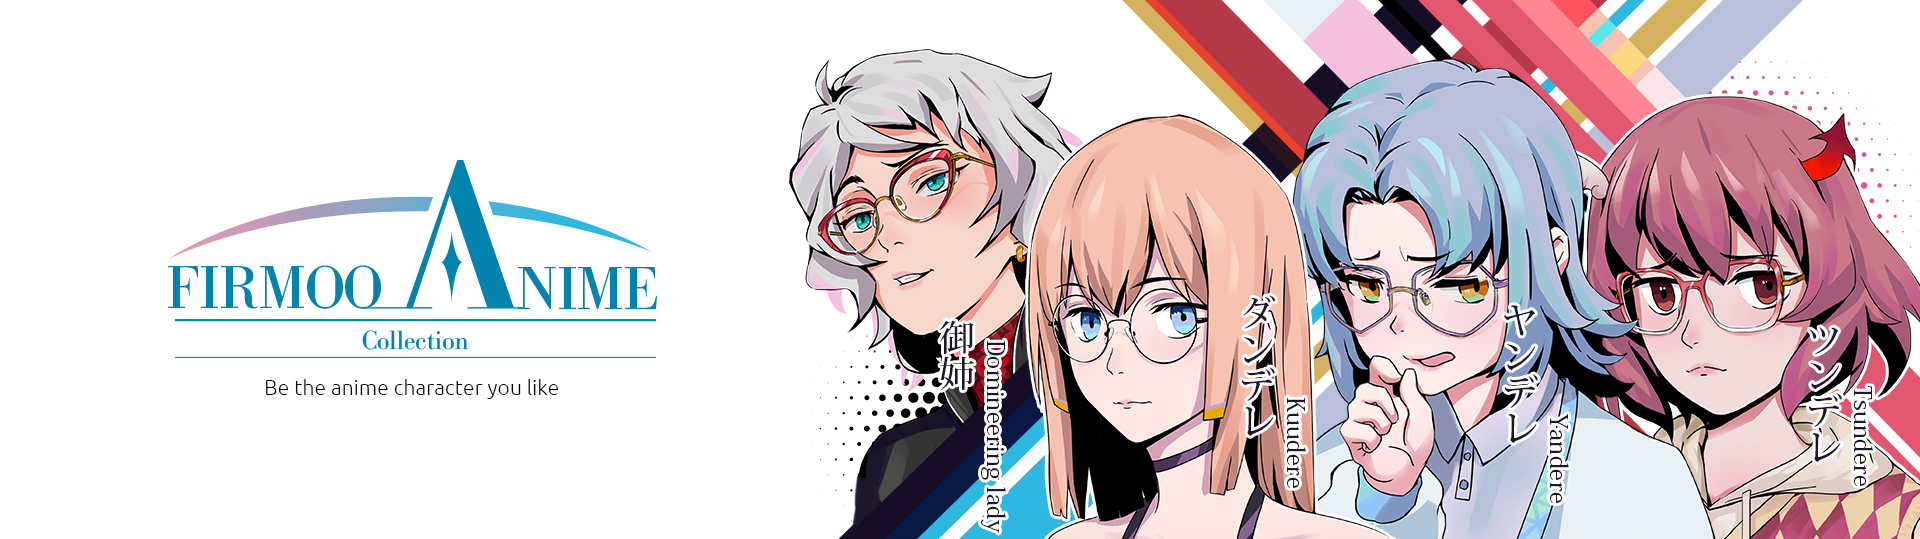 Anime 4 u - Anime couple with glasses | Facebook